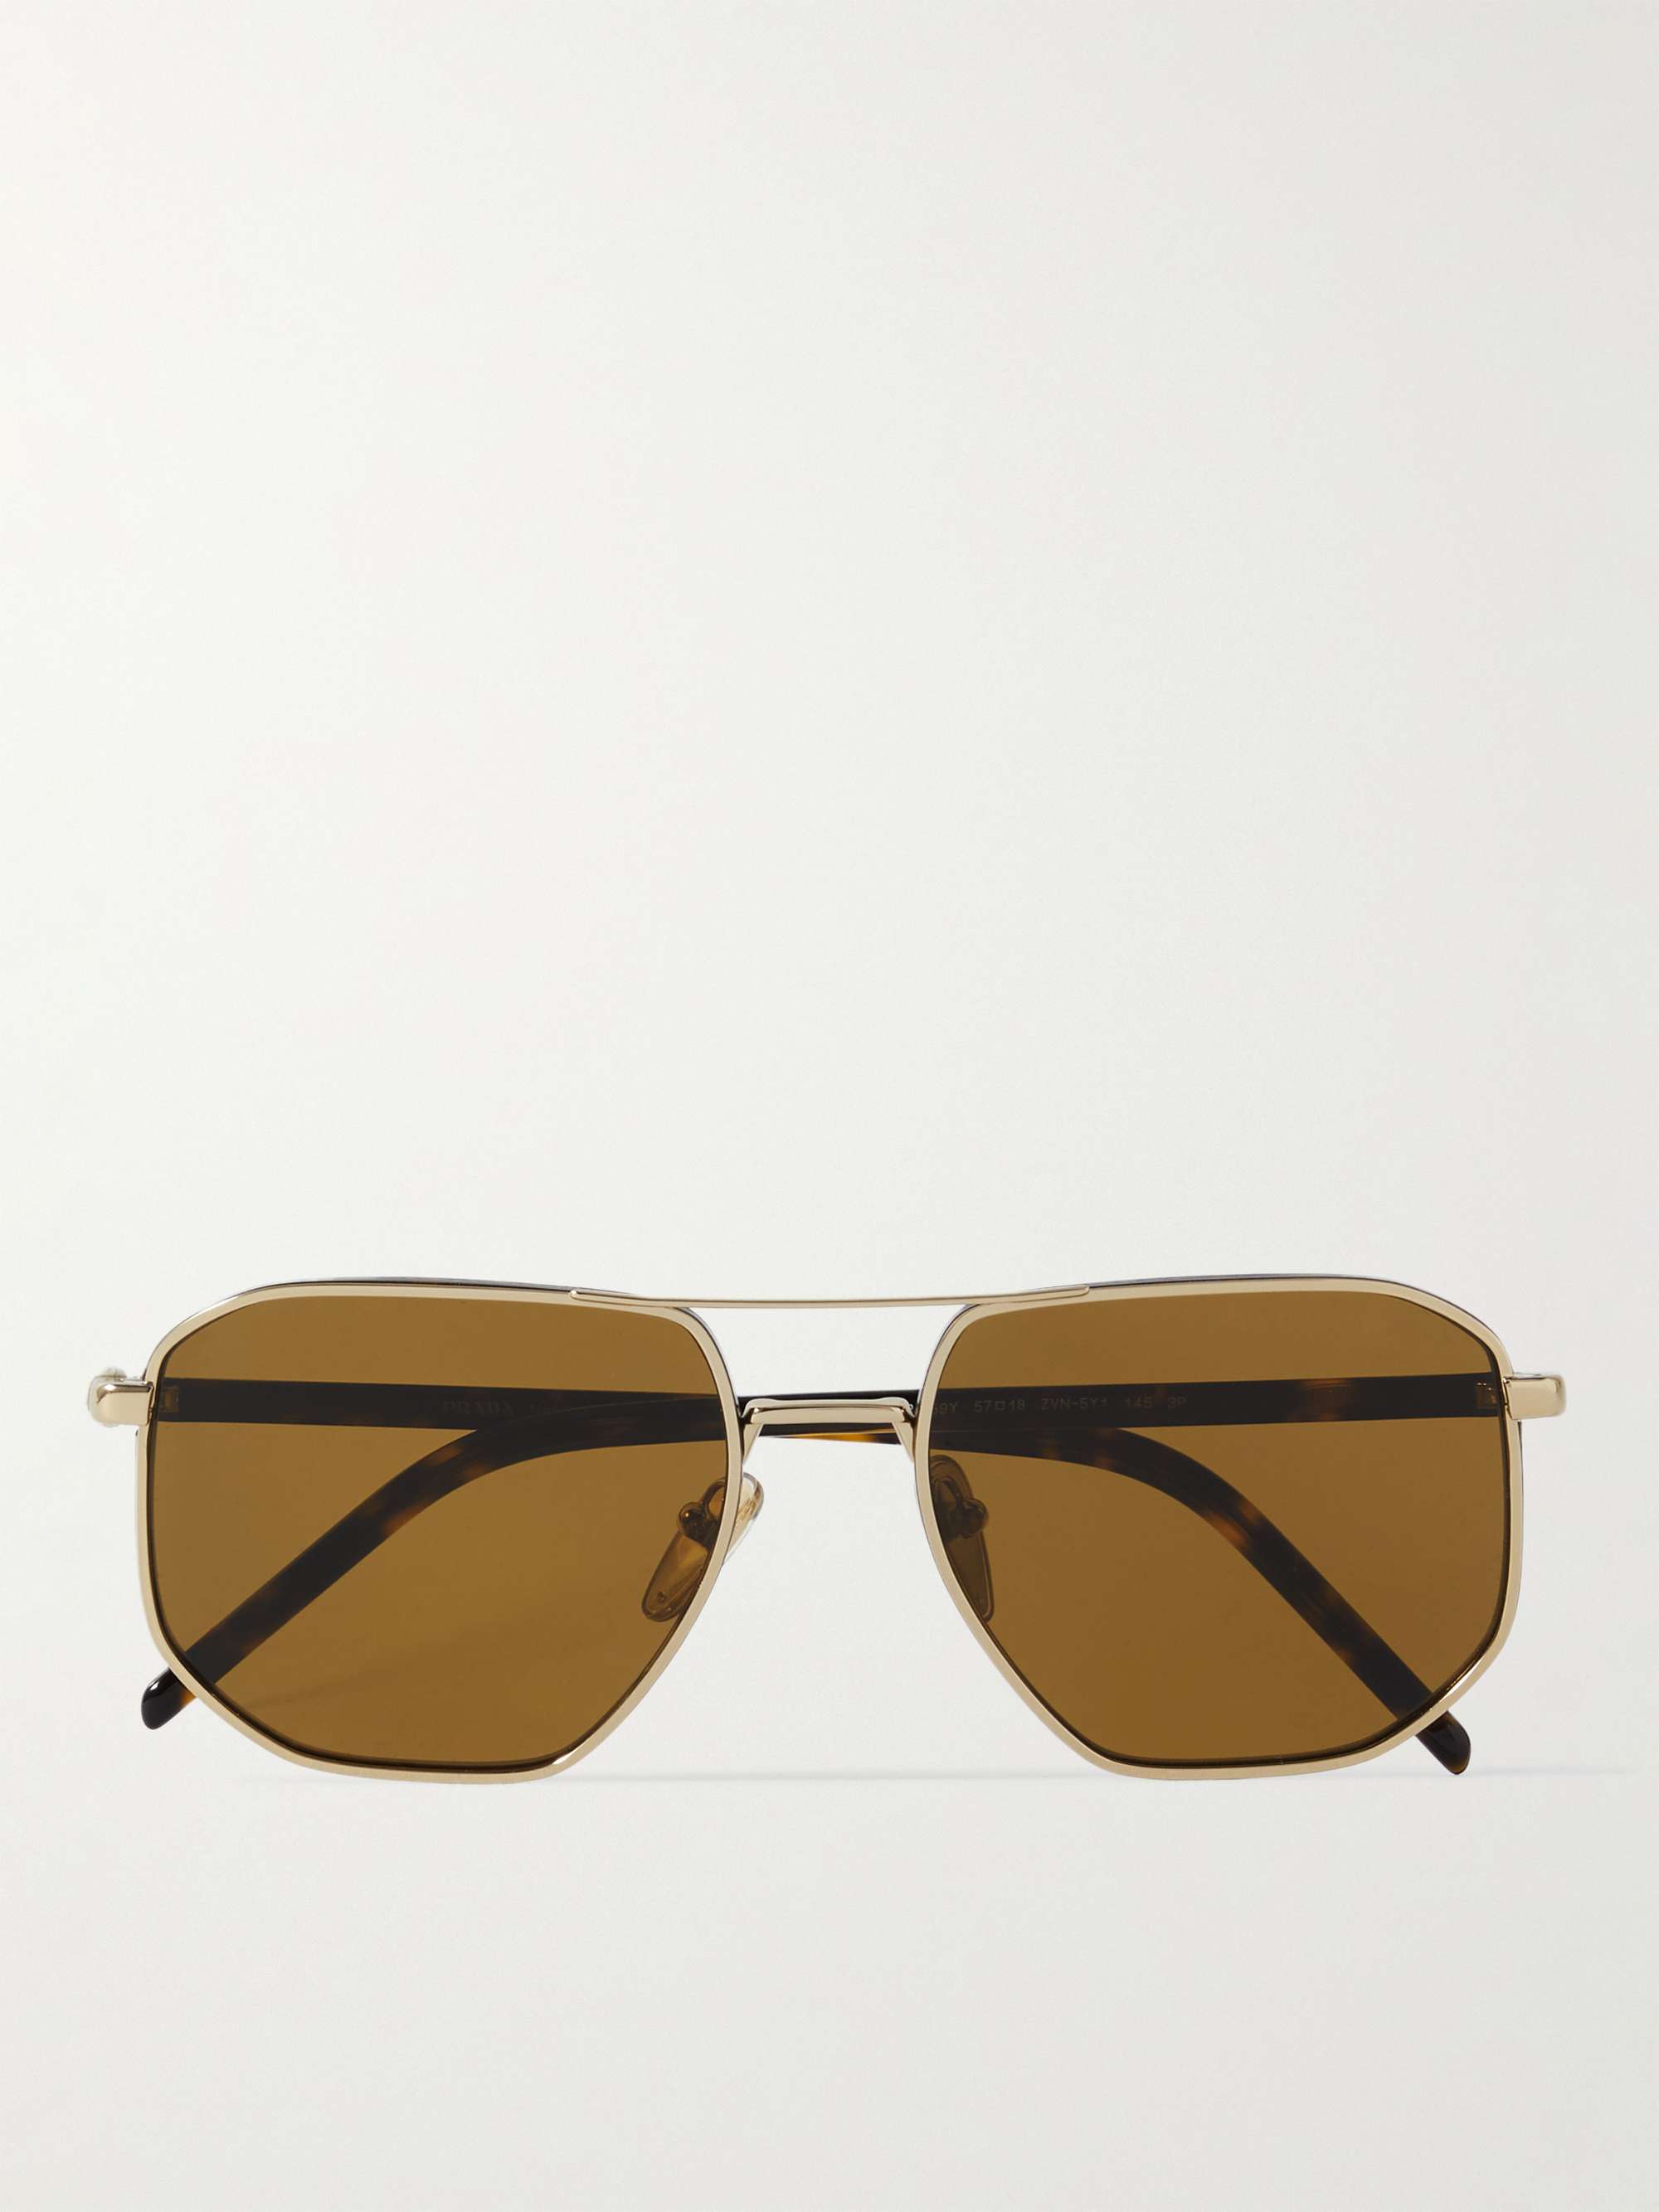 PRADA EYEWEAR Aviator-Style Gold-Tone and Tortoiseshell Acetate Sunglasses  for Men | MR PORTER